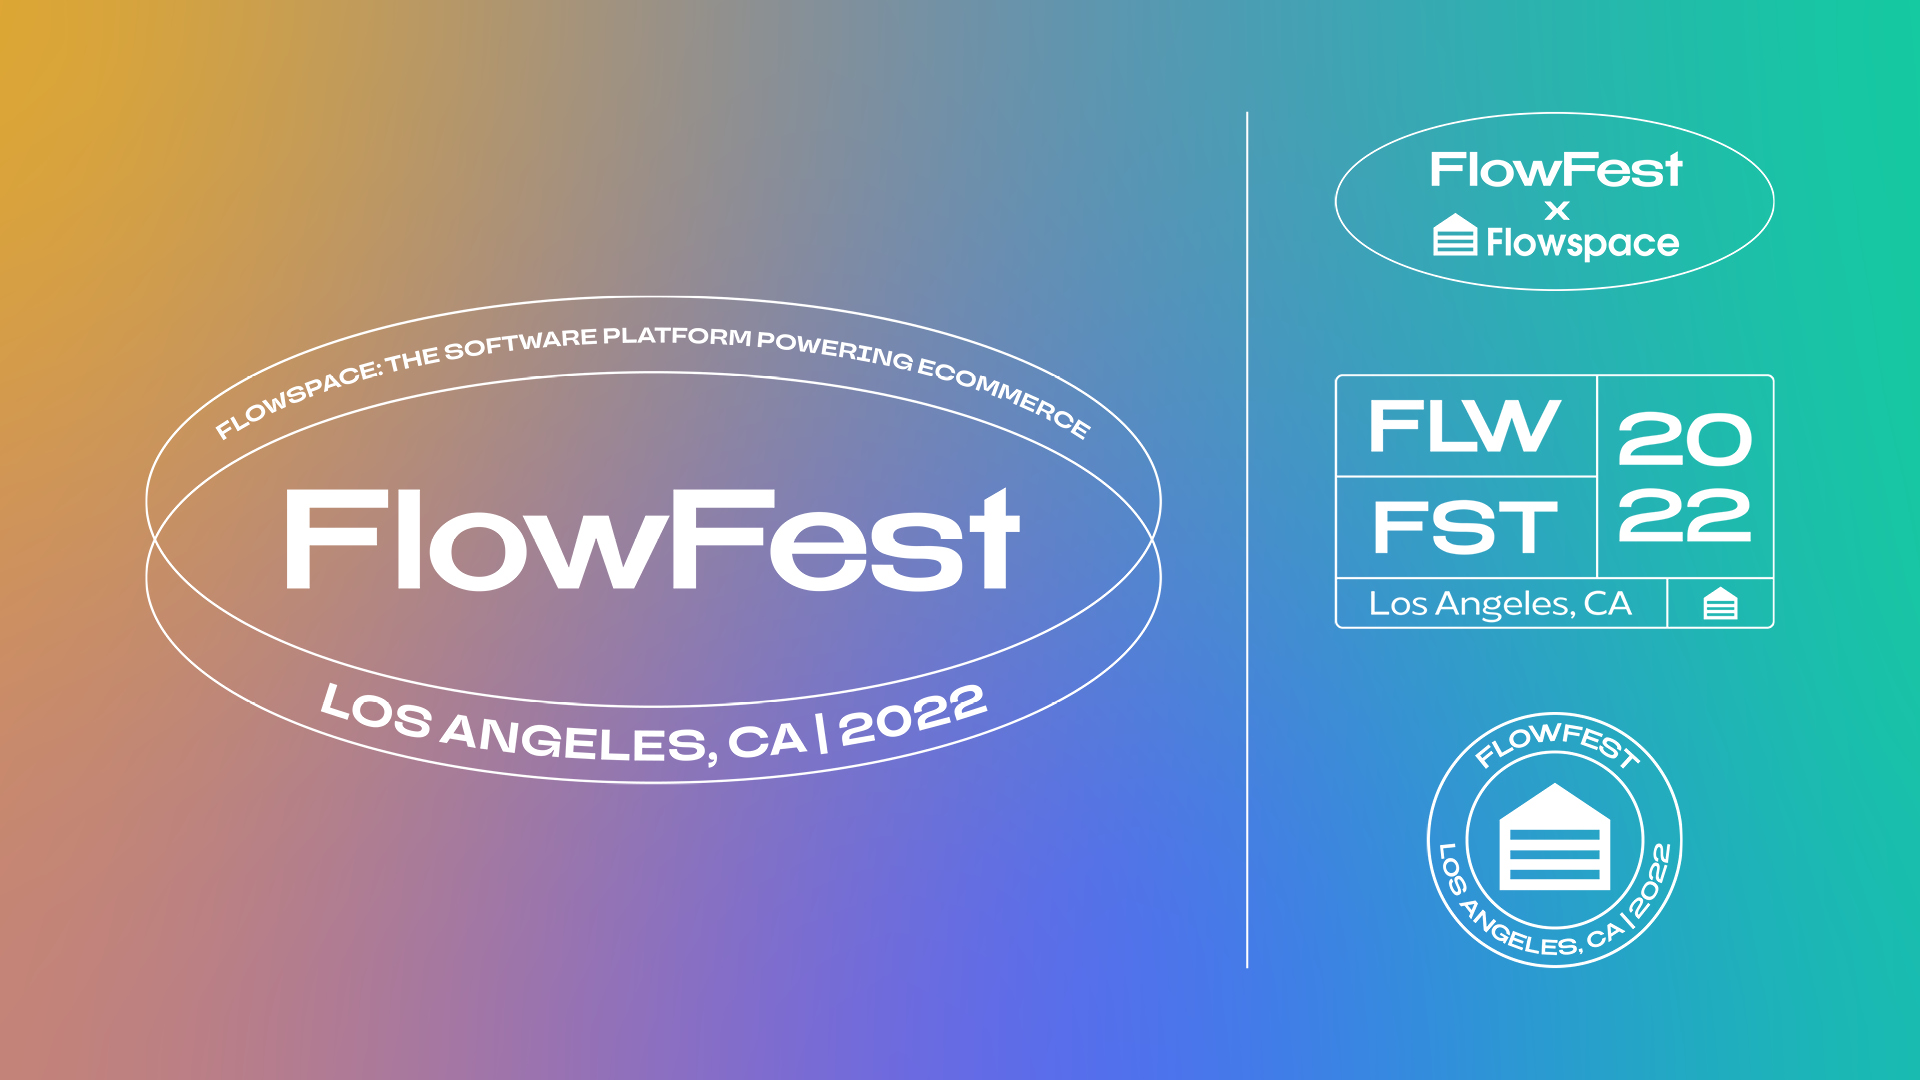 FlowFest logos and alternates